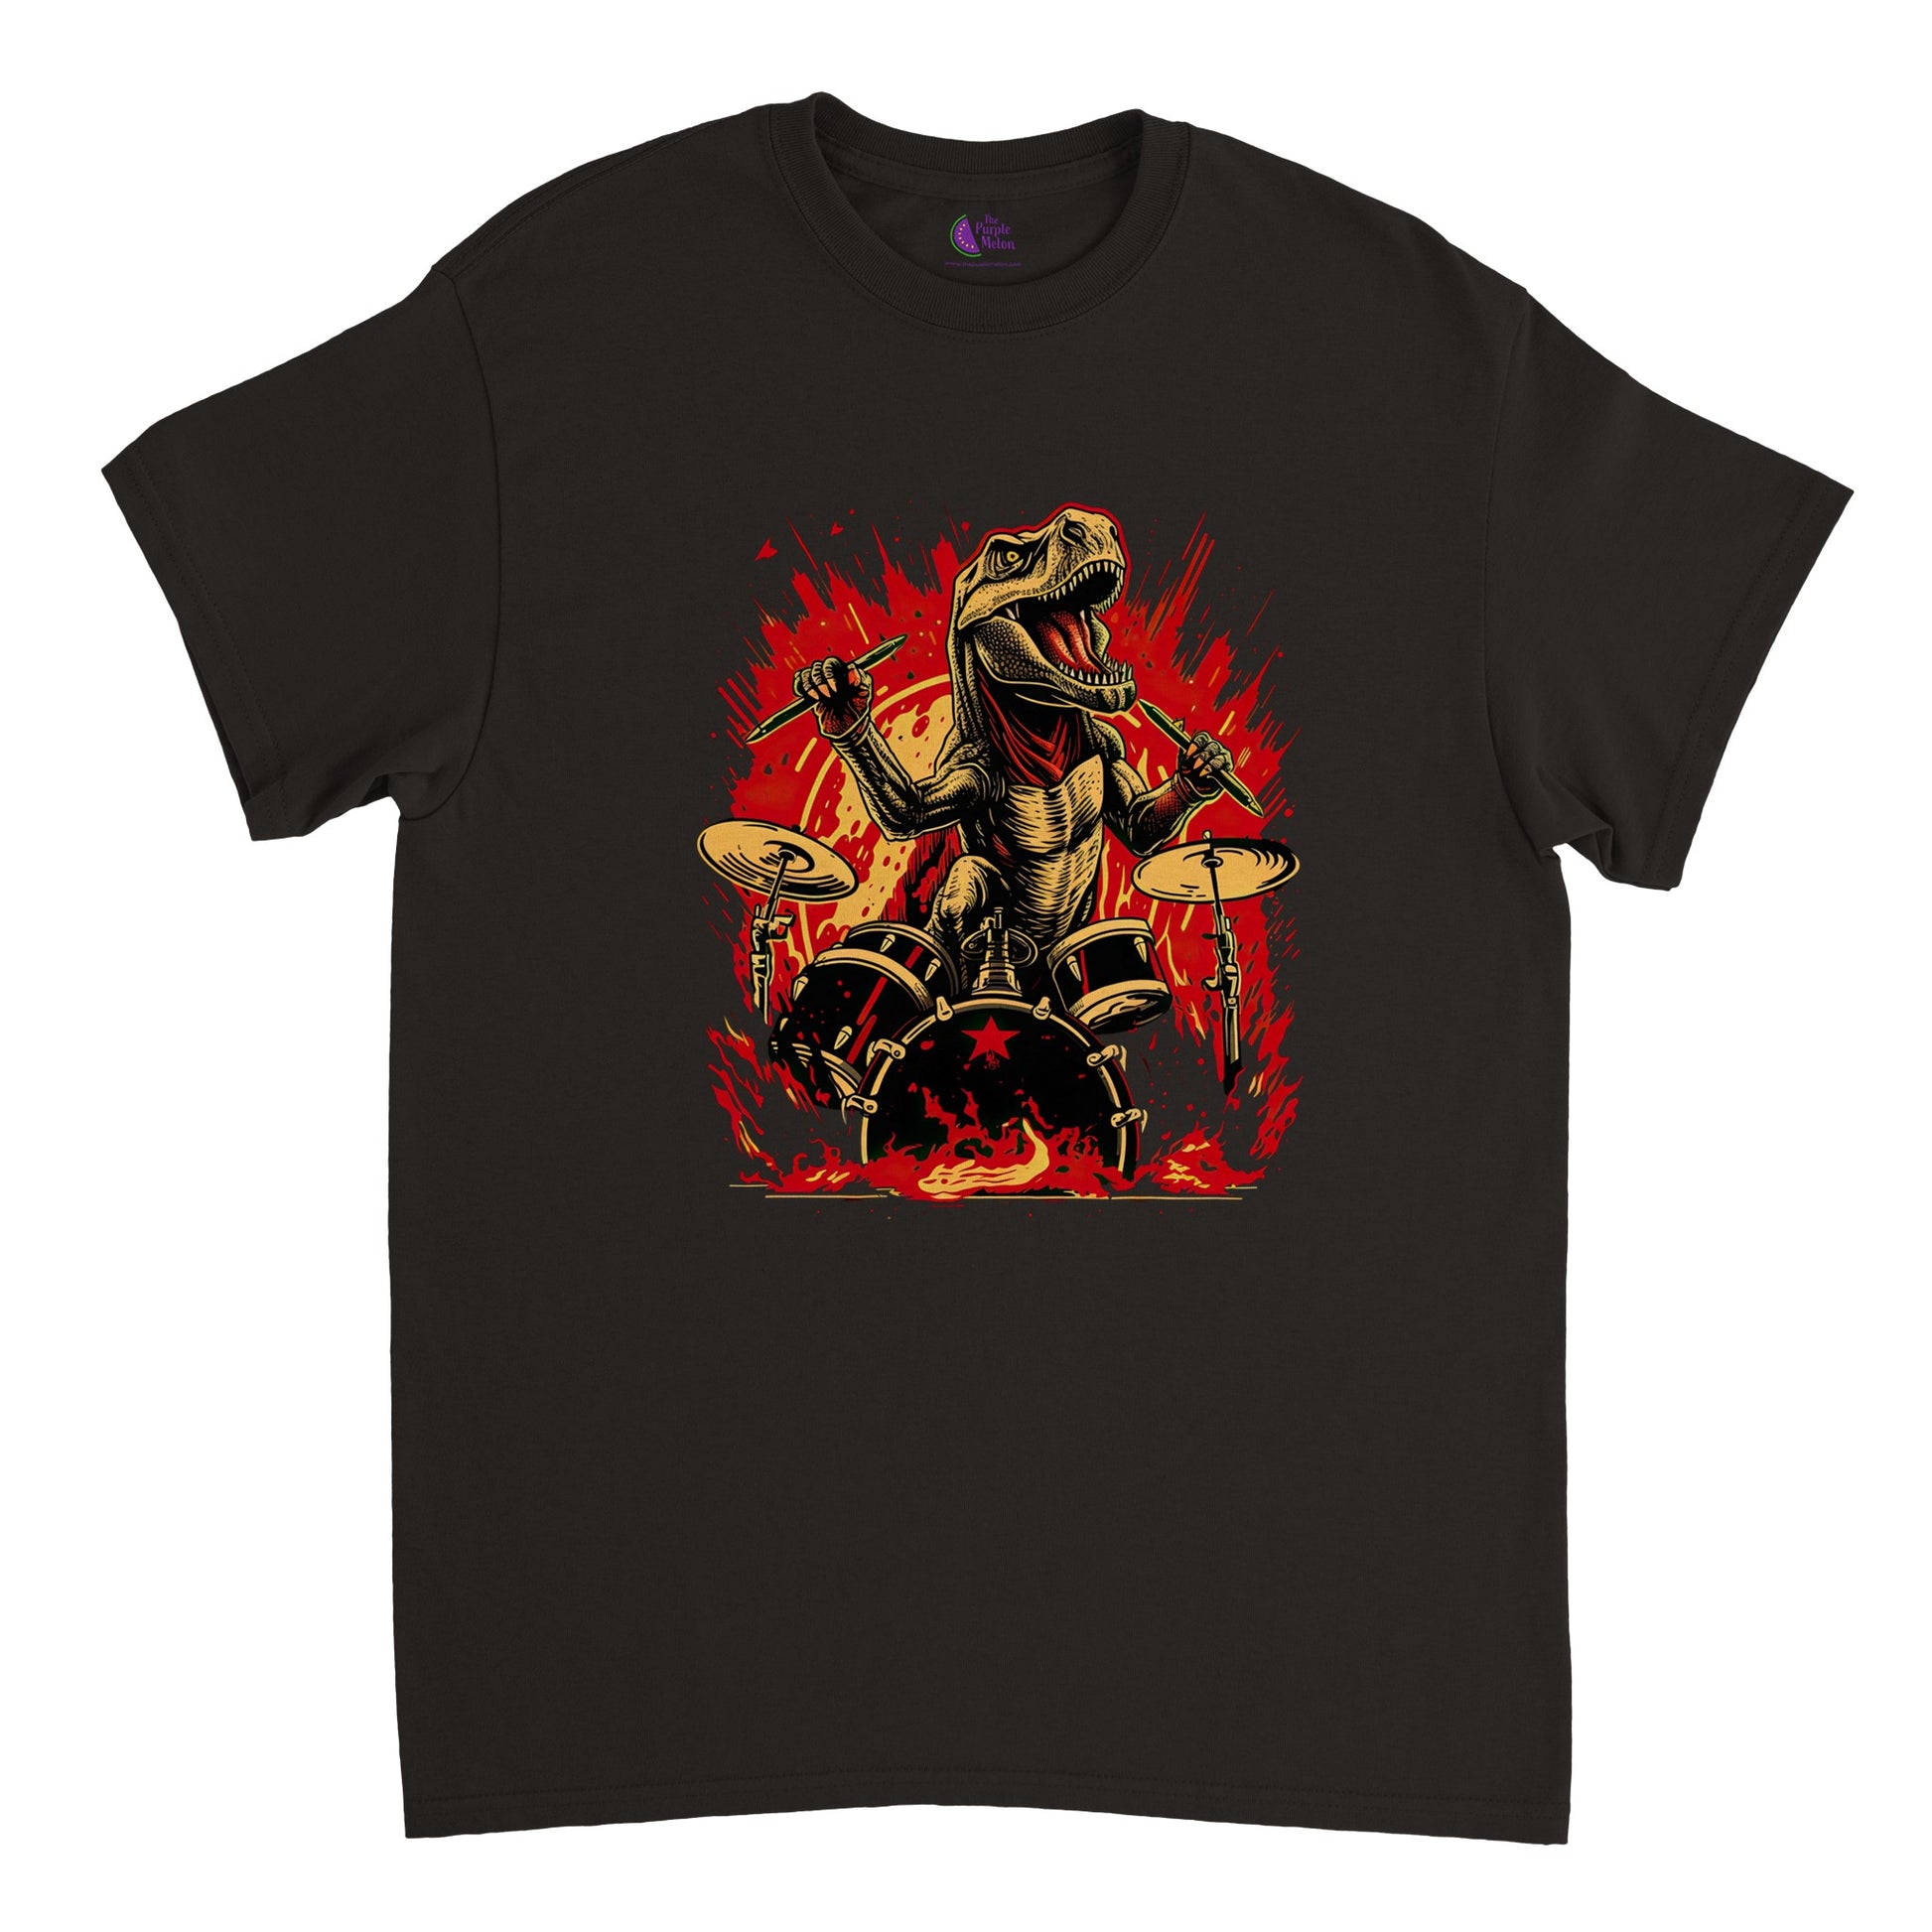 Black t-shirt with t-rex drummer print